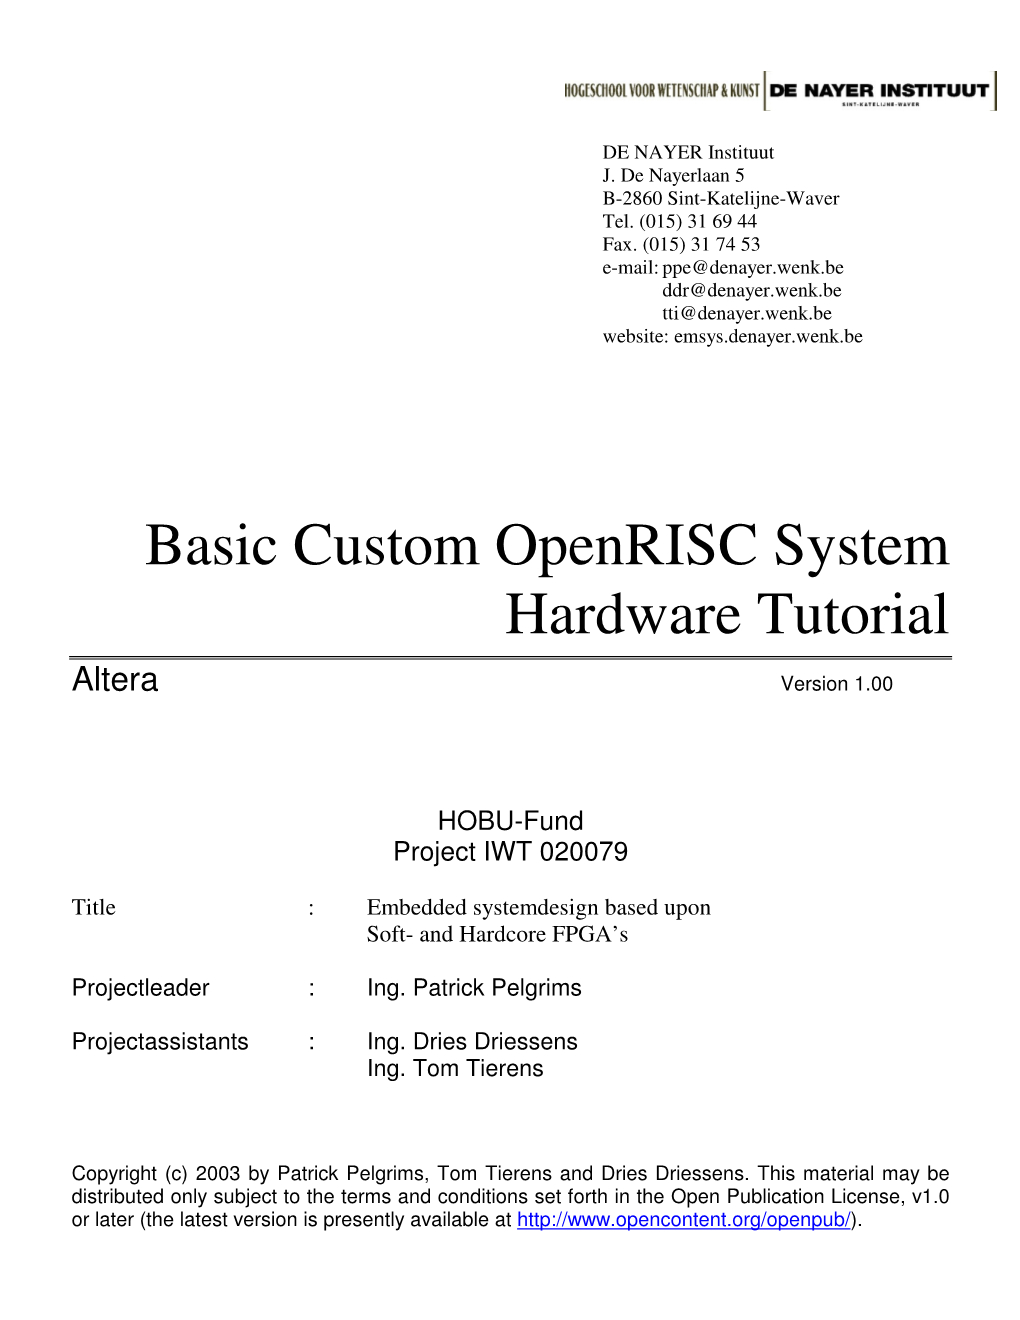 Basic Custom Openrisc System Hardware Tutorial